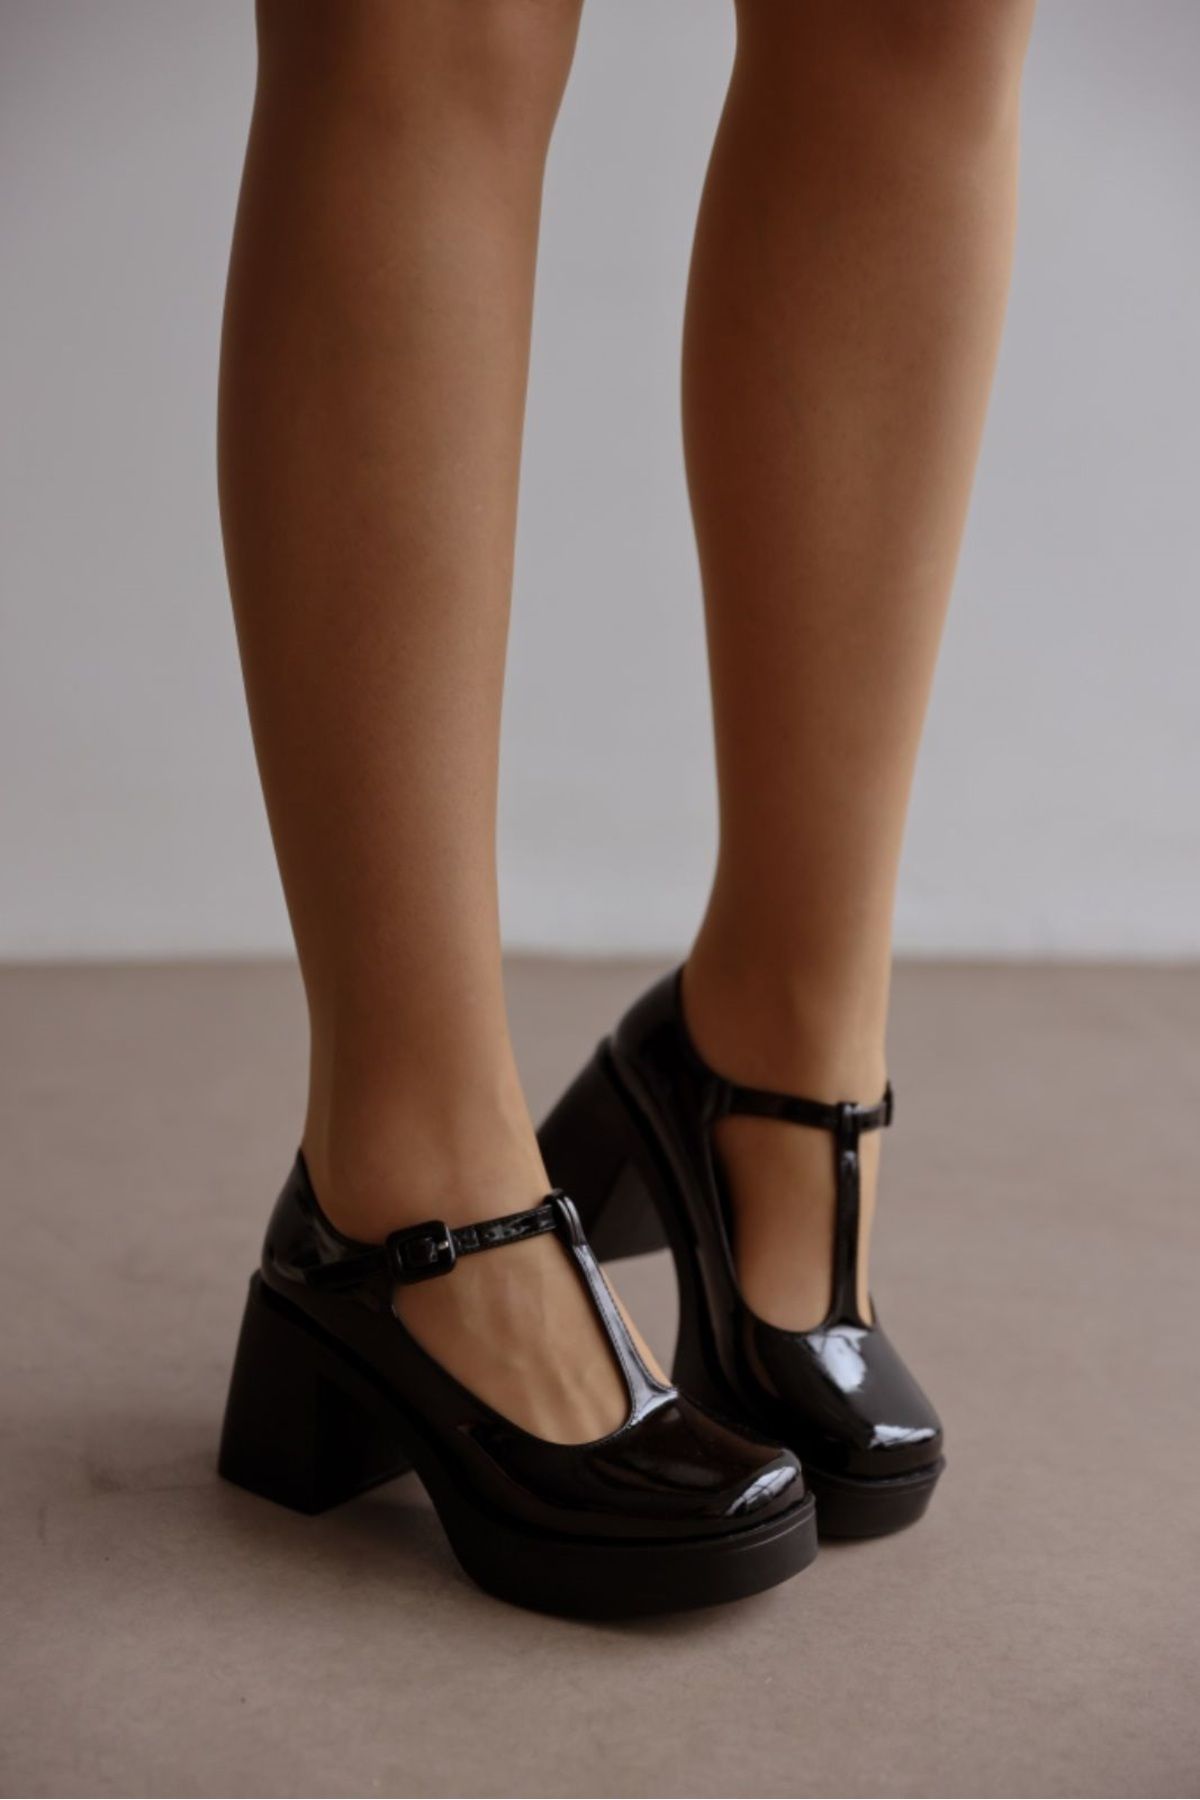 selinshoes Mendes Bant Detaylı Platformlu Kadın Topuklu Ayakkabı - SİYAH